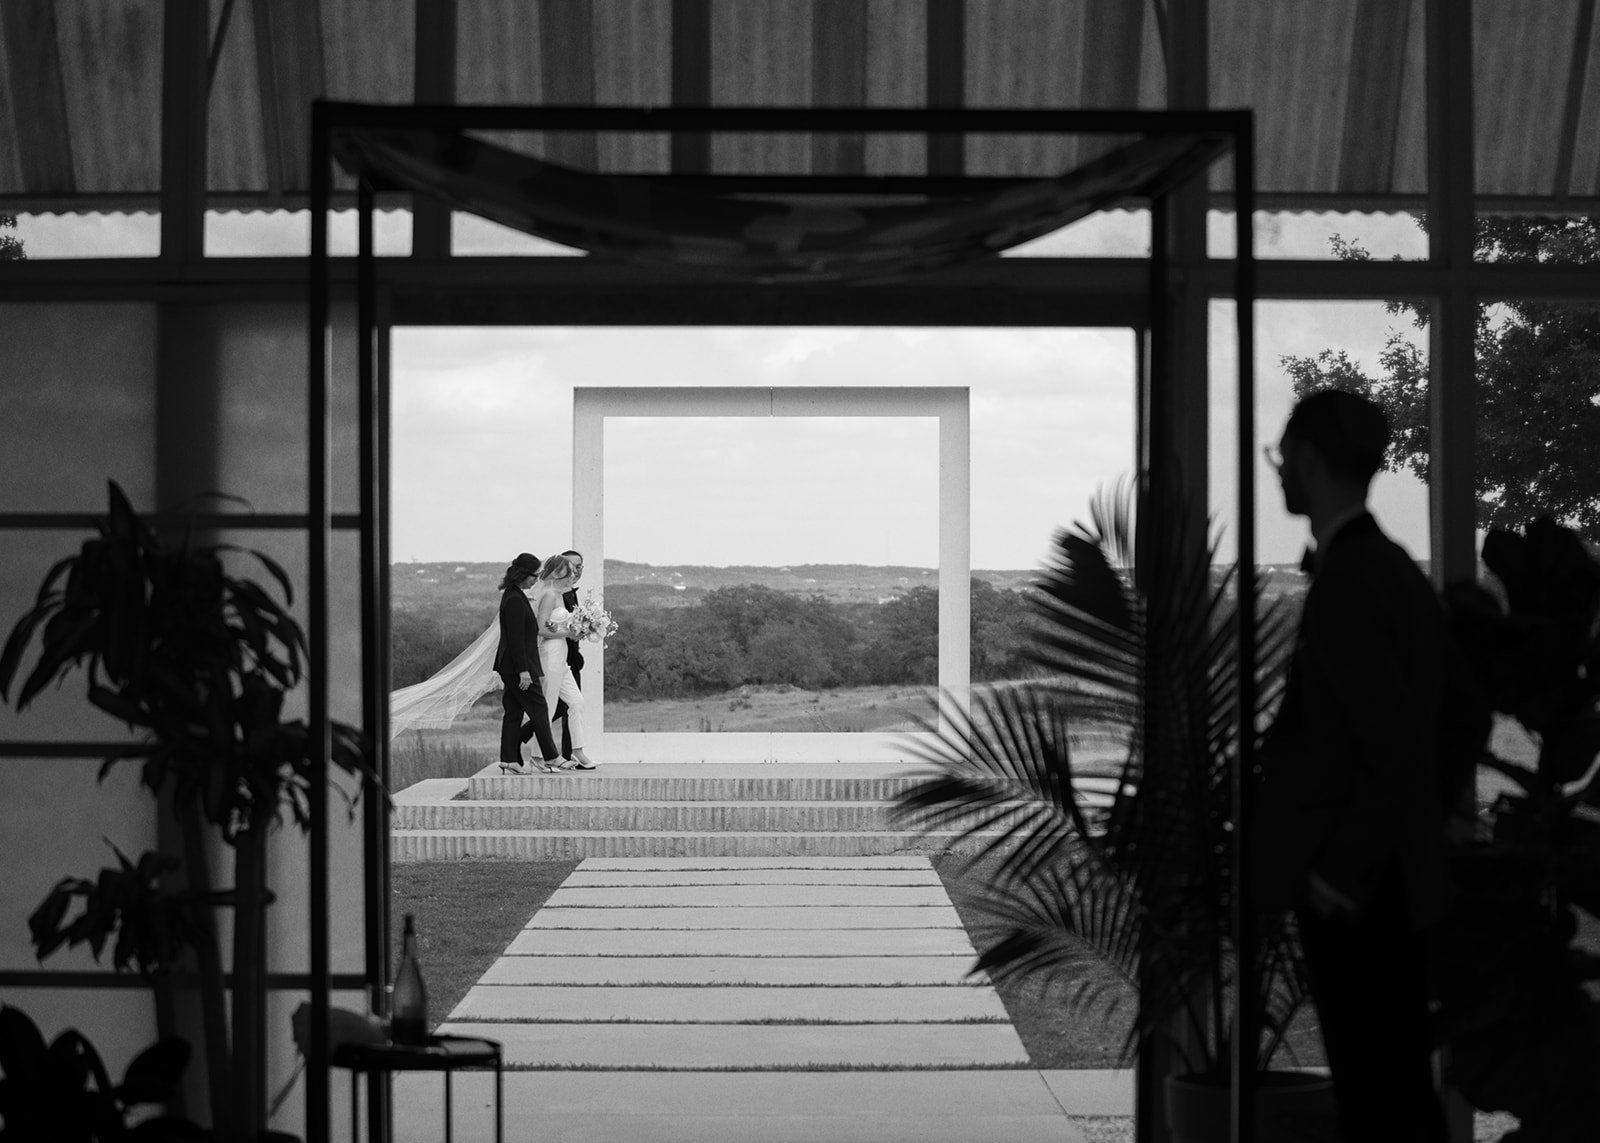 Best-Austin-Candid-Wedding-Photographers-Film-Documentary-35mm-Prospect-House-61.jpg